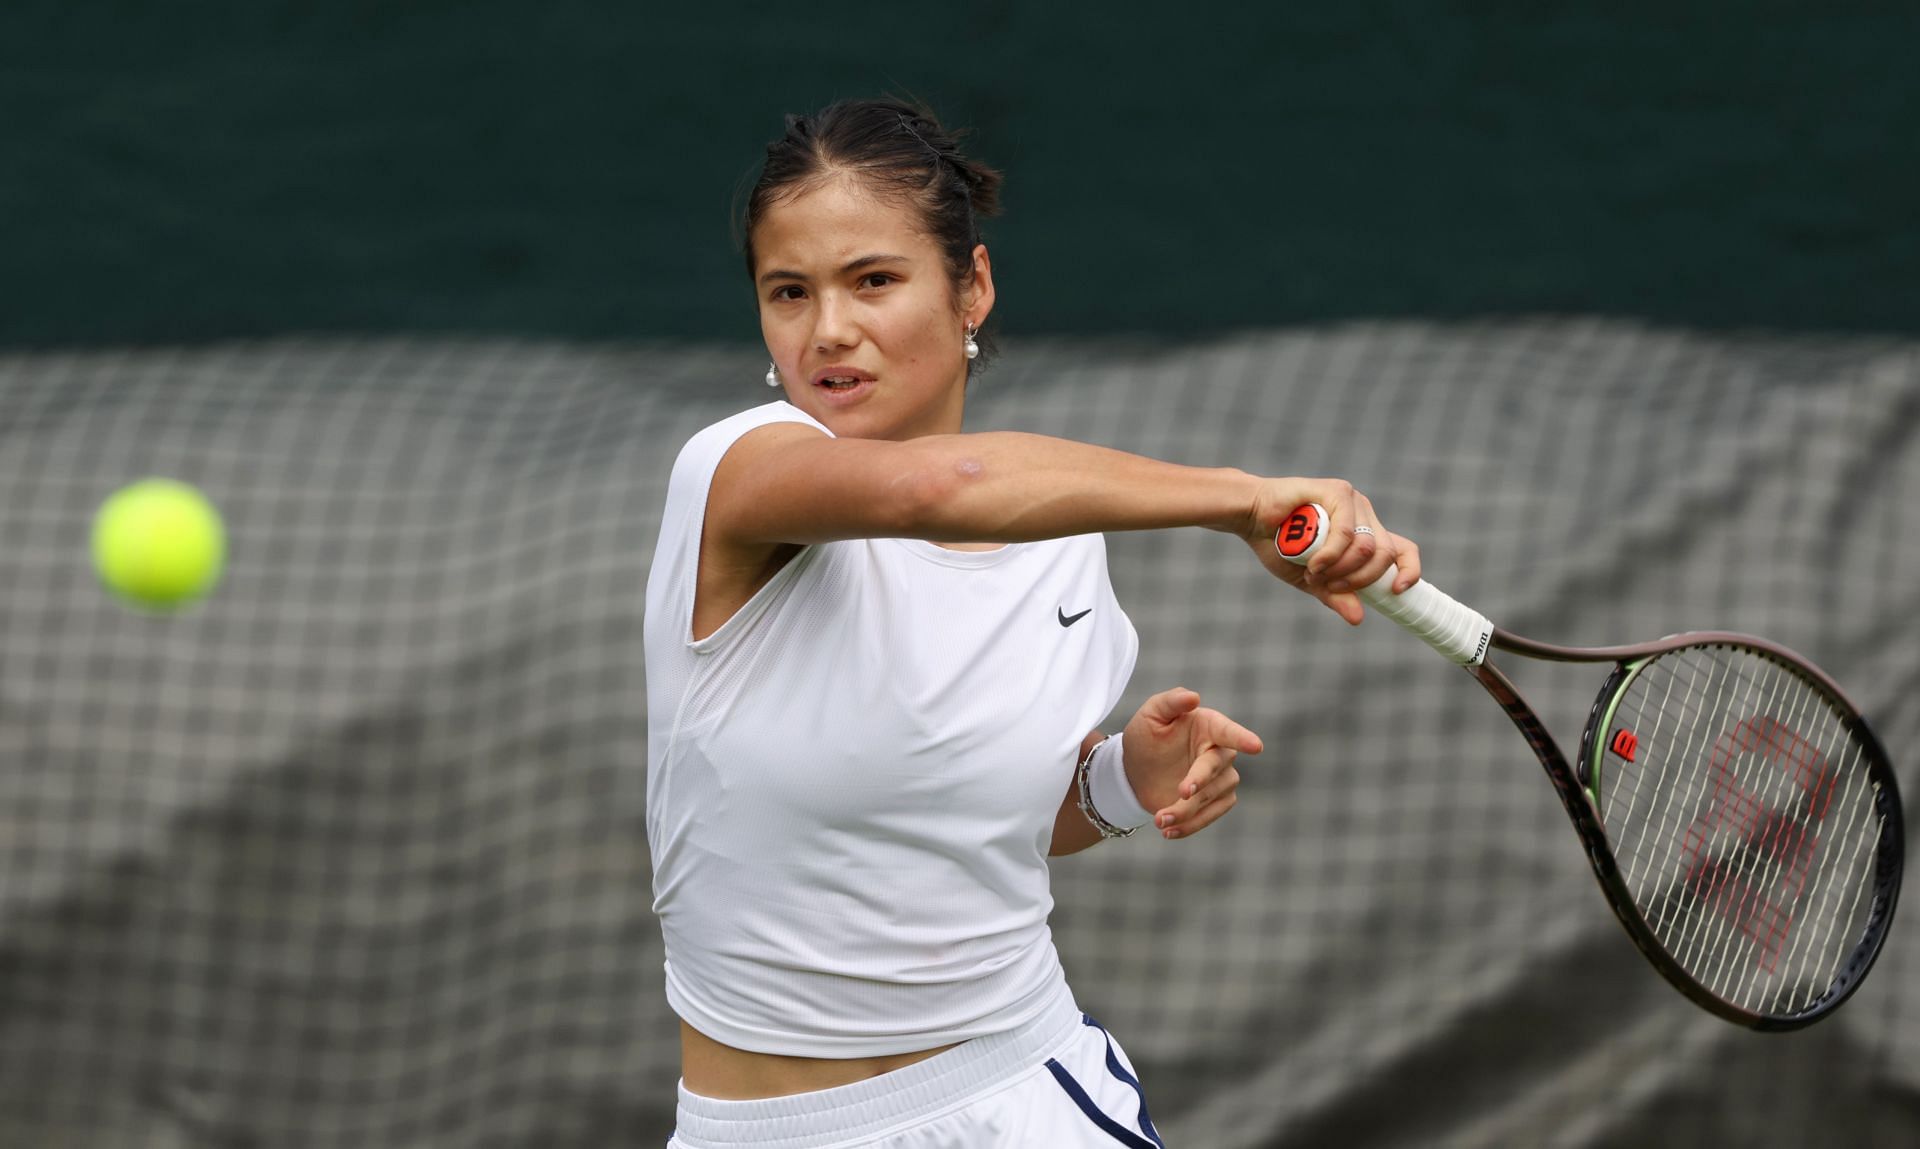 Emma Raducanu is the 10th seed at the 2022 Wimbledon Championships